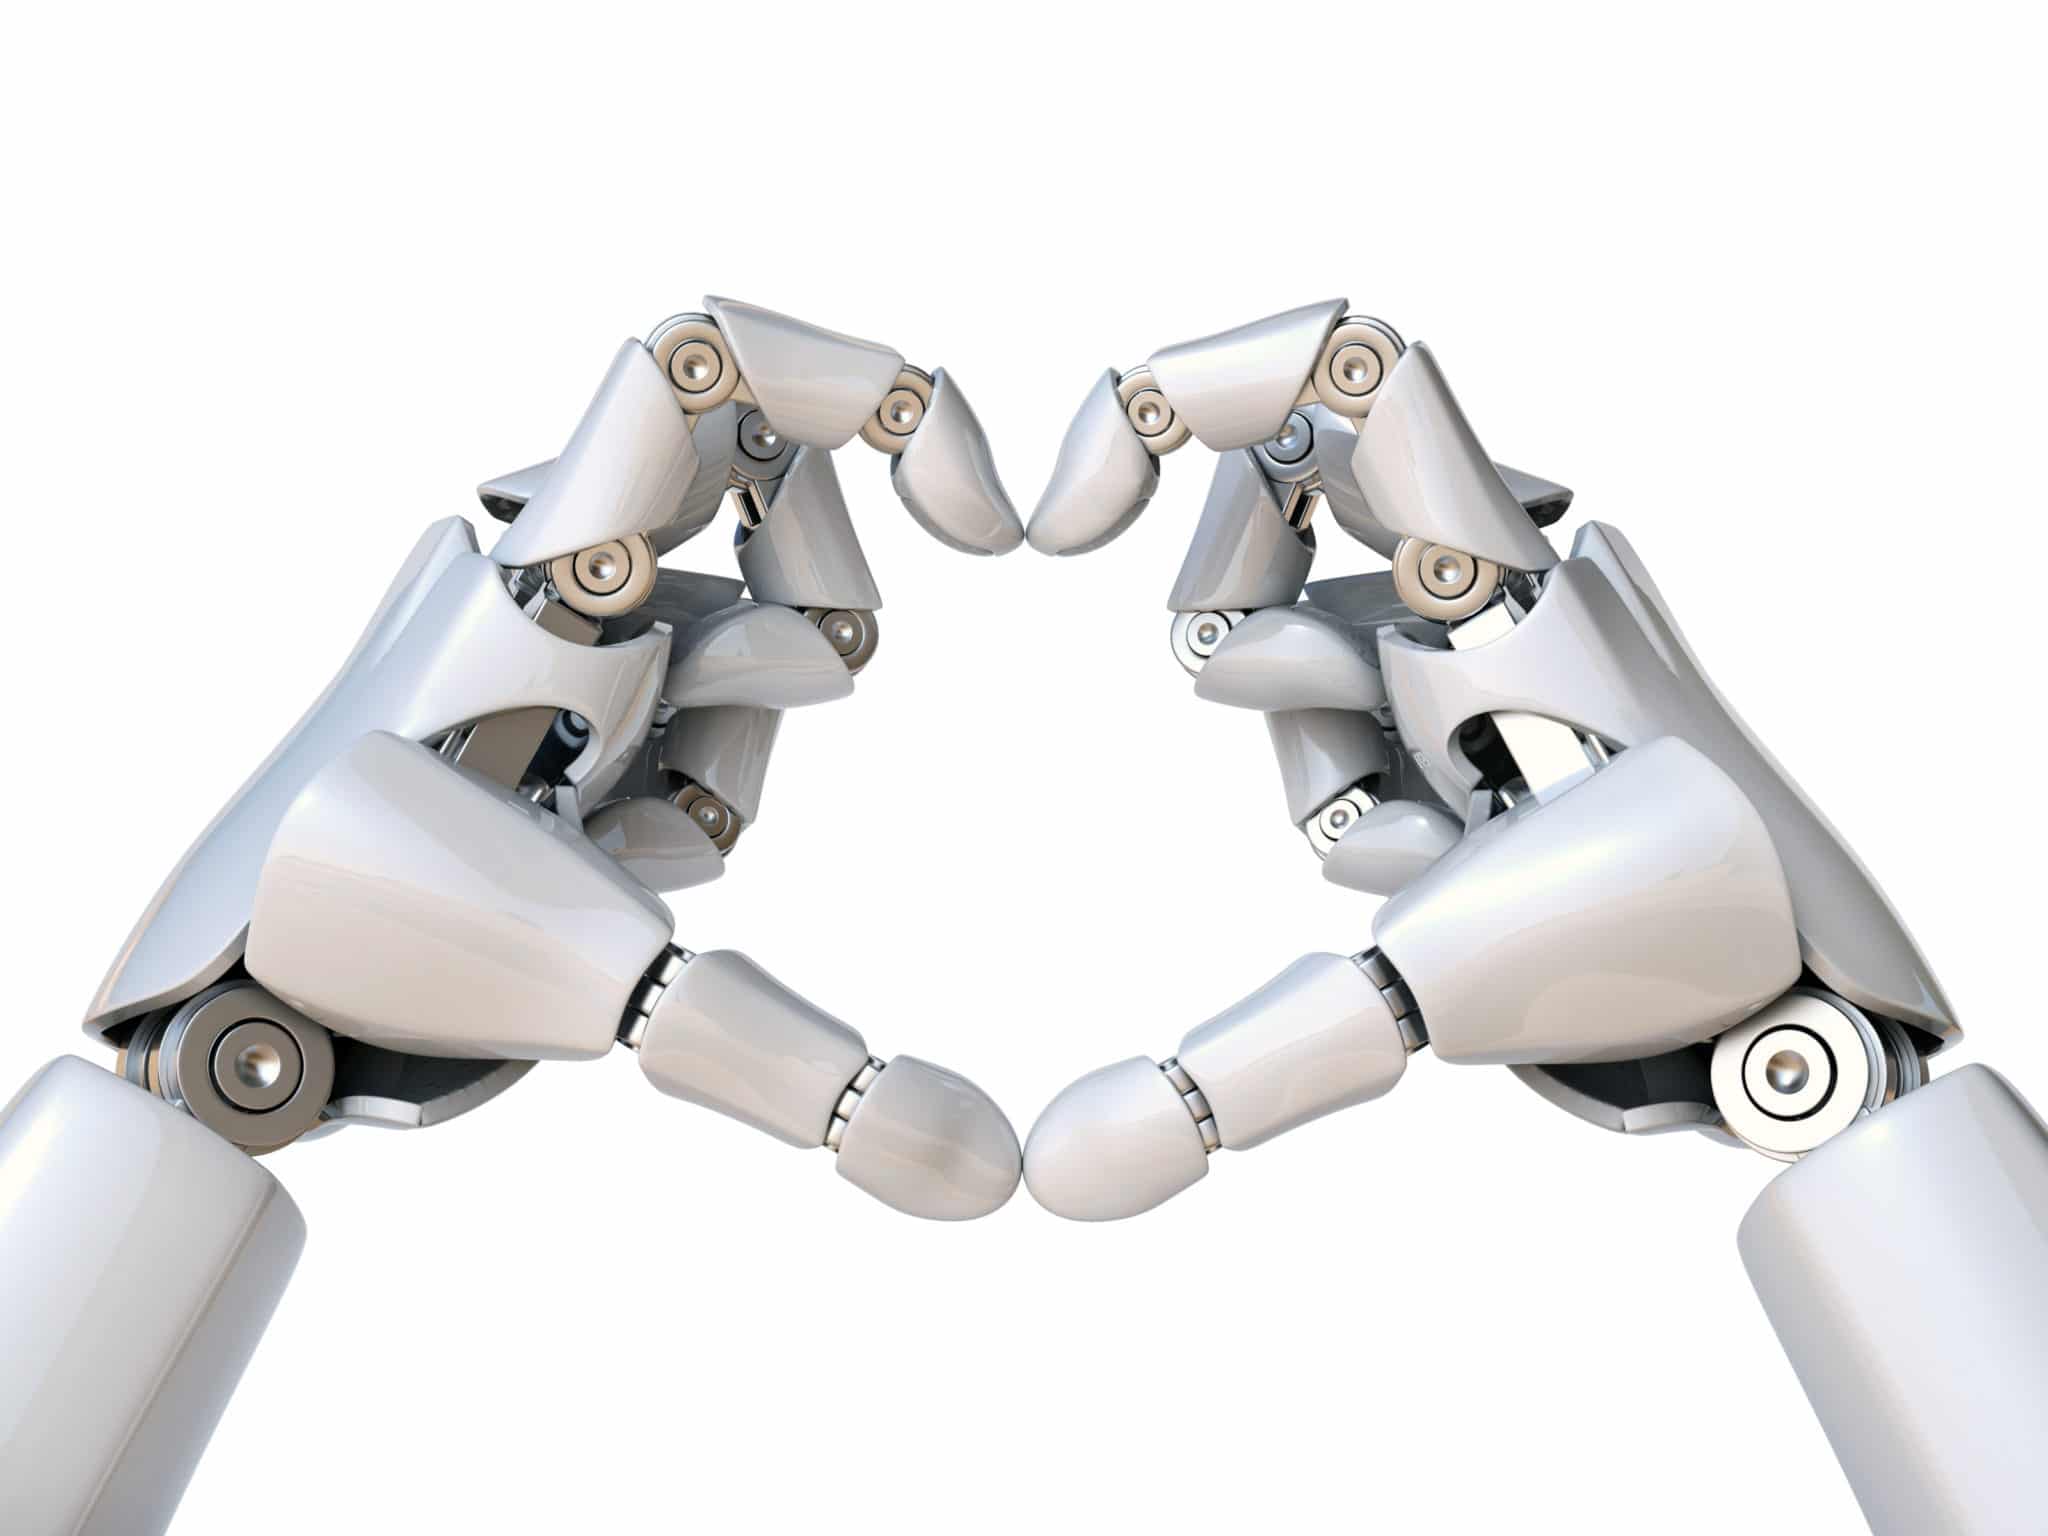 Robot hands form heart shape 3d rendering